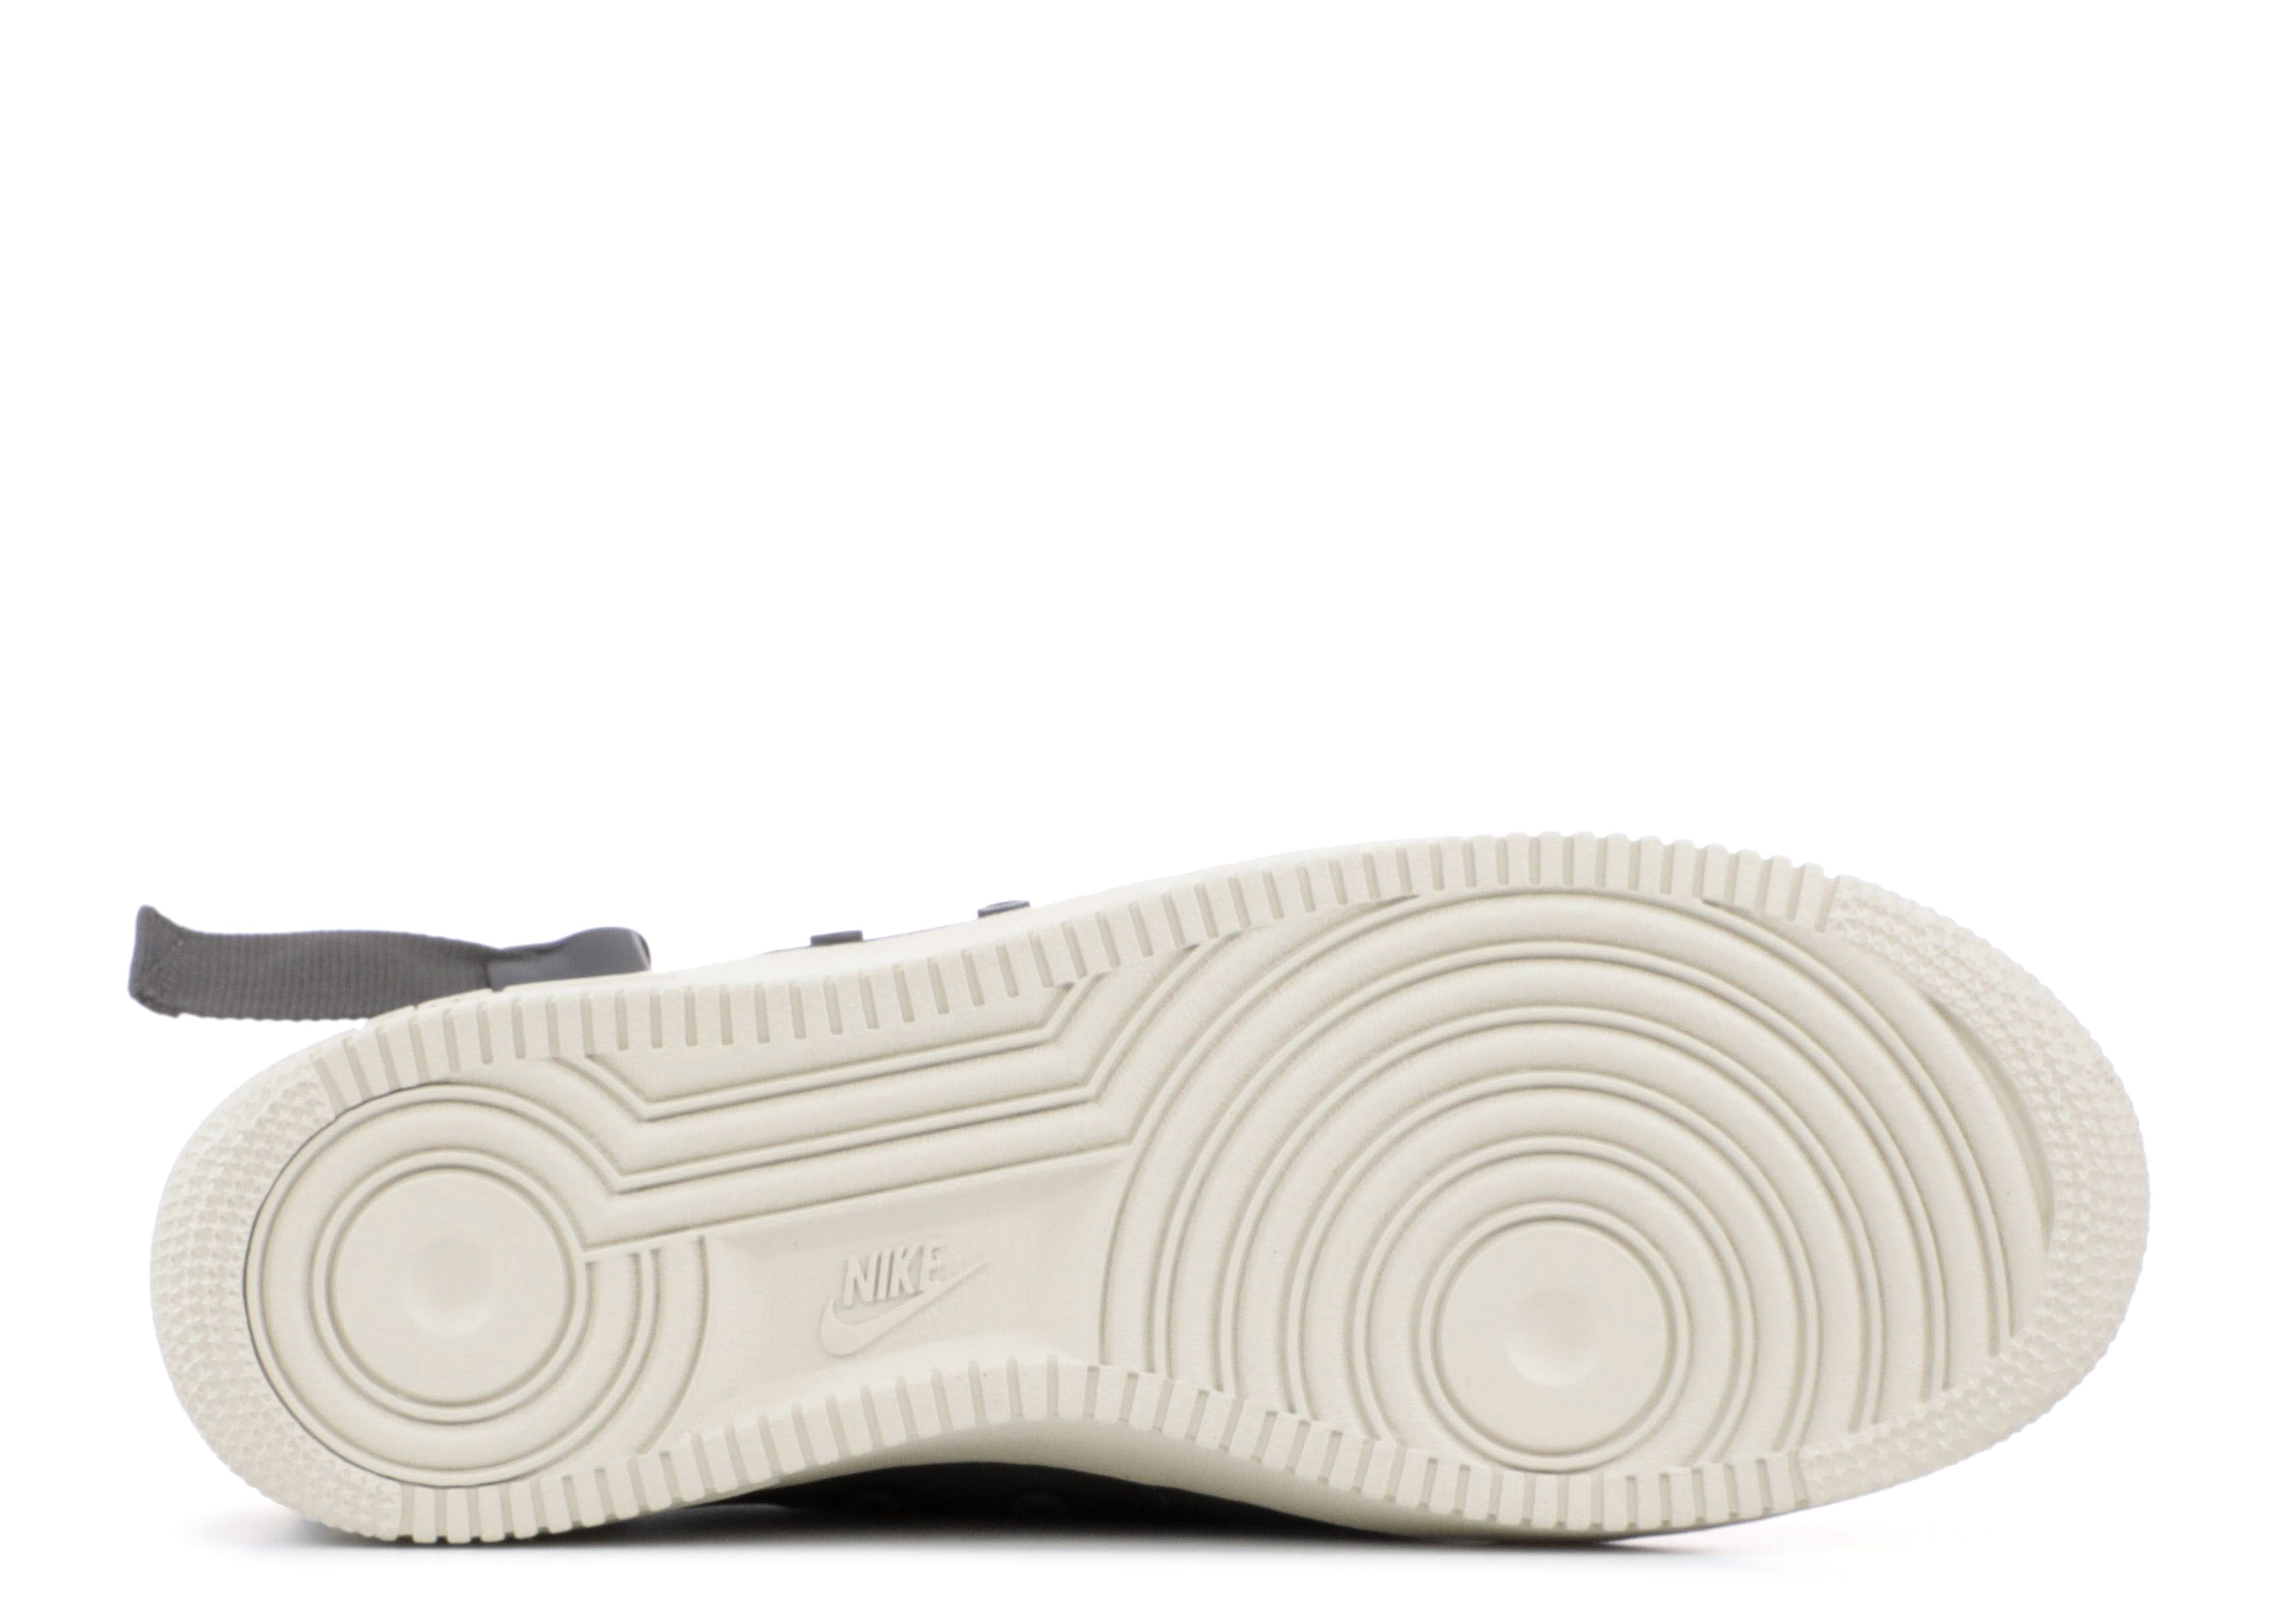 Nike Men's SF AF1 Air Force 1 Mid Shoes Dark Grey Trainers 917753